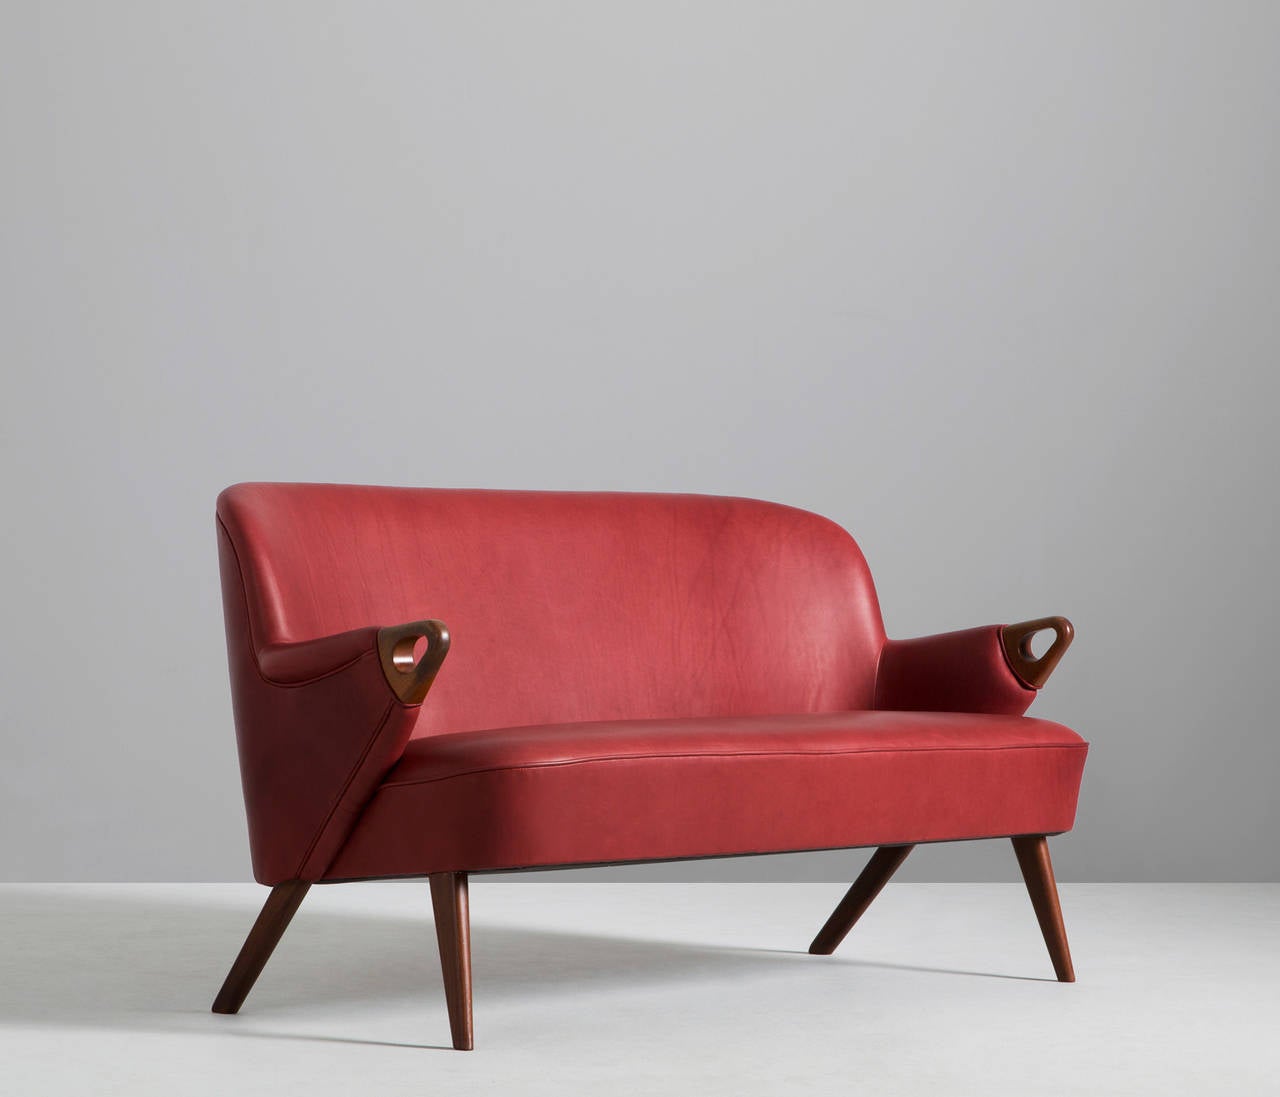 Scandinavian Modern Danish Designed Sofa Reupholstered in Red Leather